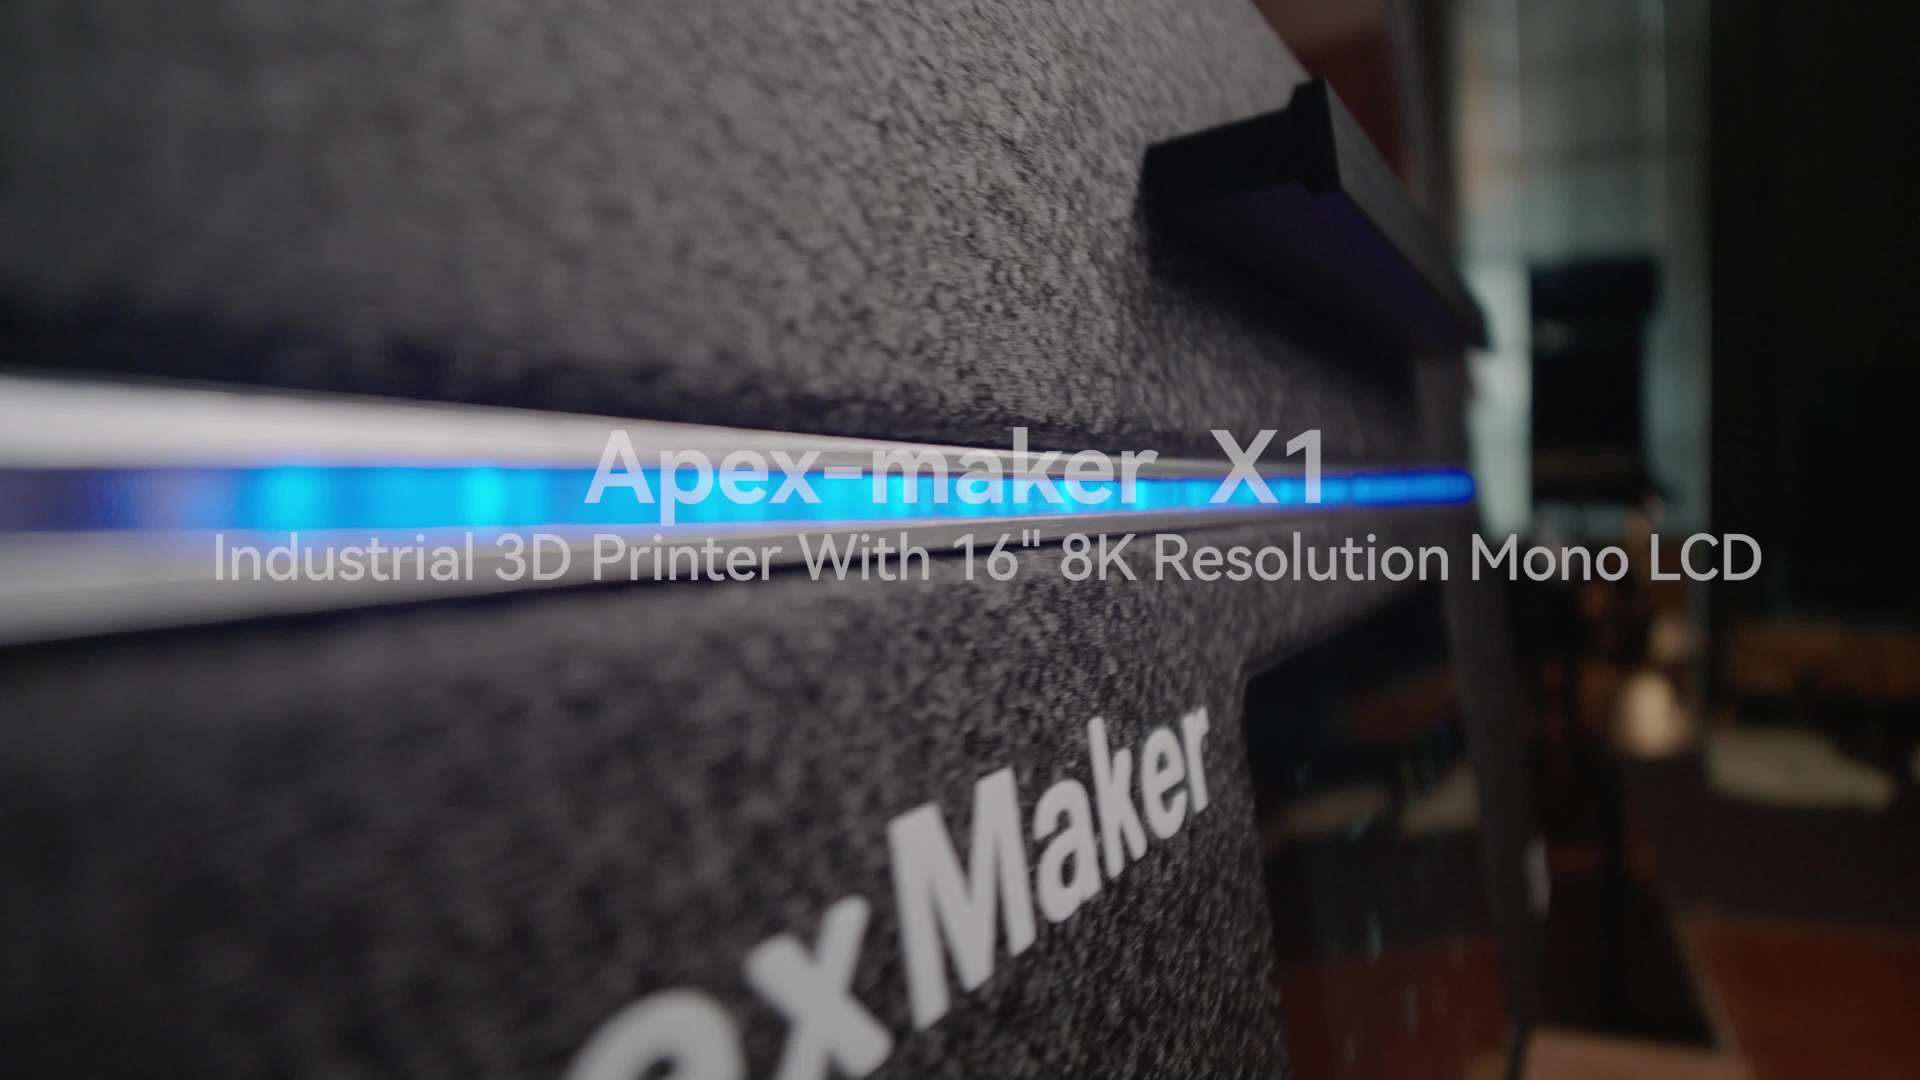 Apex-maker X1: Industrial High-Speed 16"